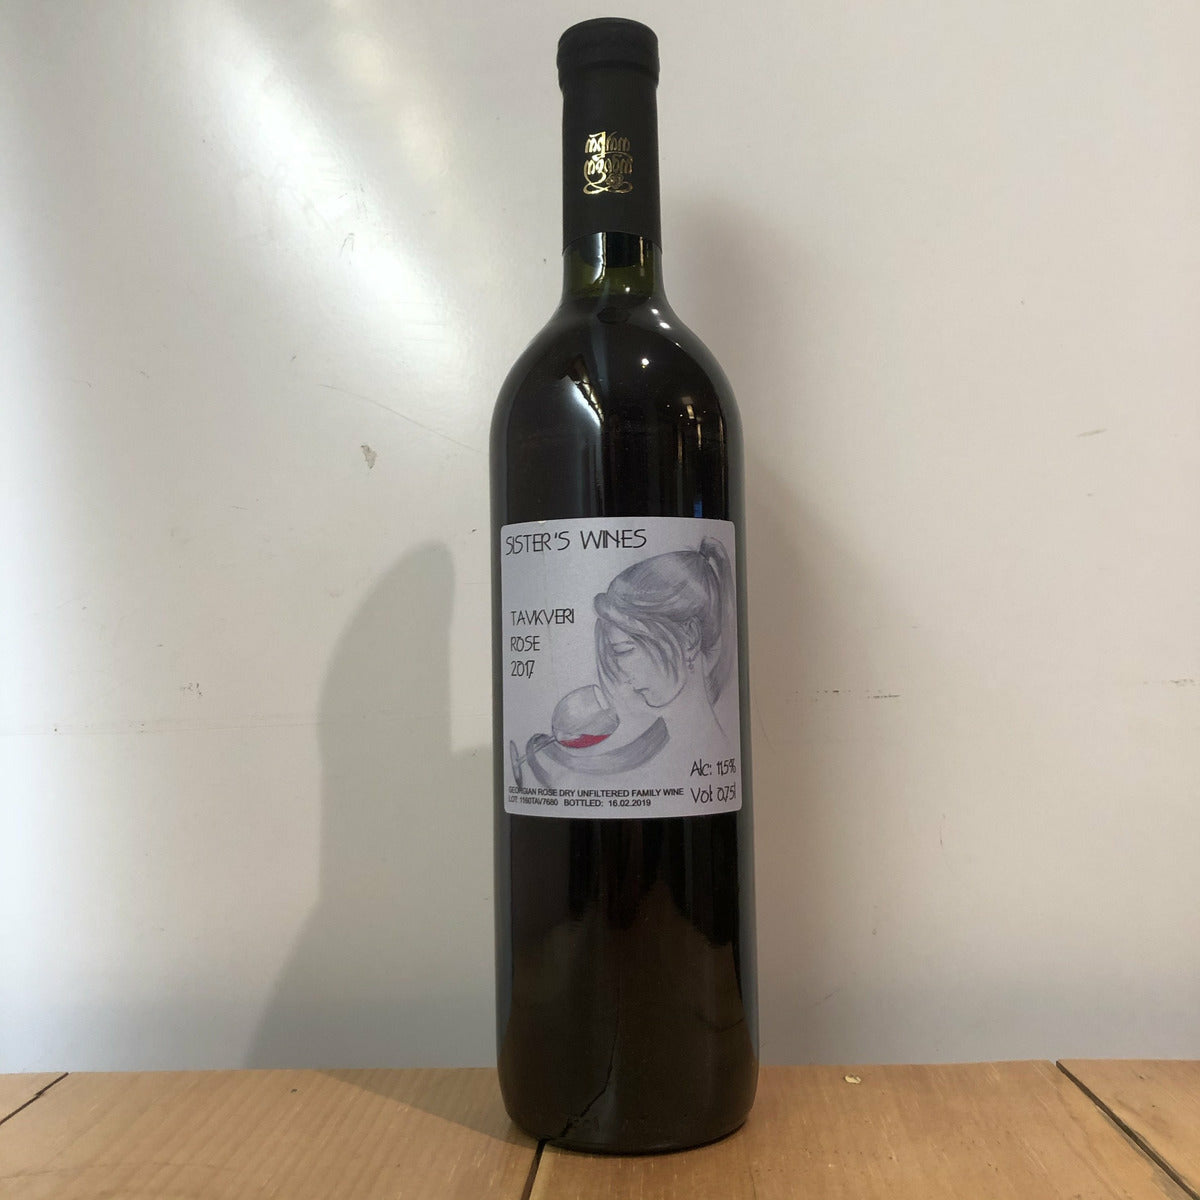 Okro's Wines, Tavkveri Rose 2017